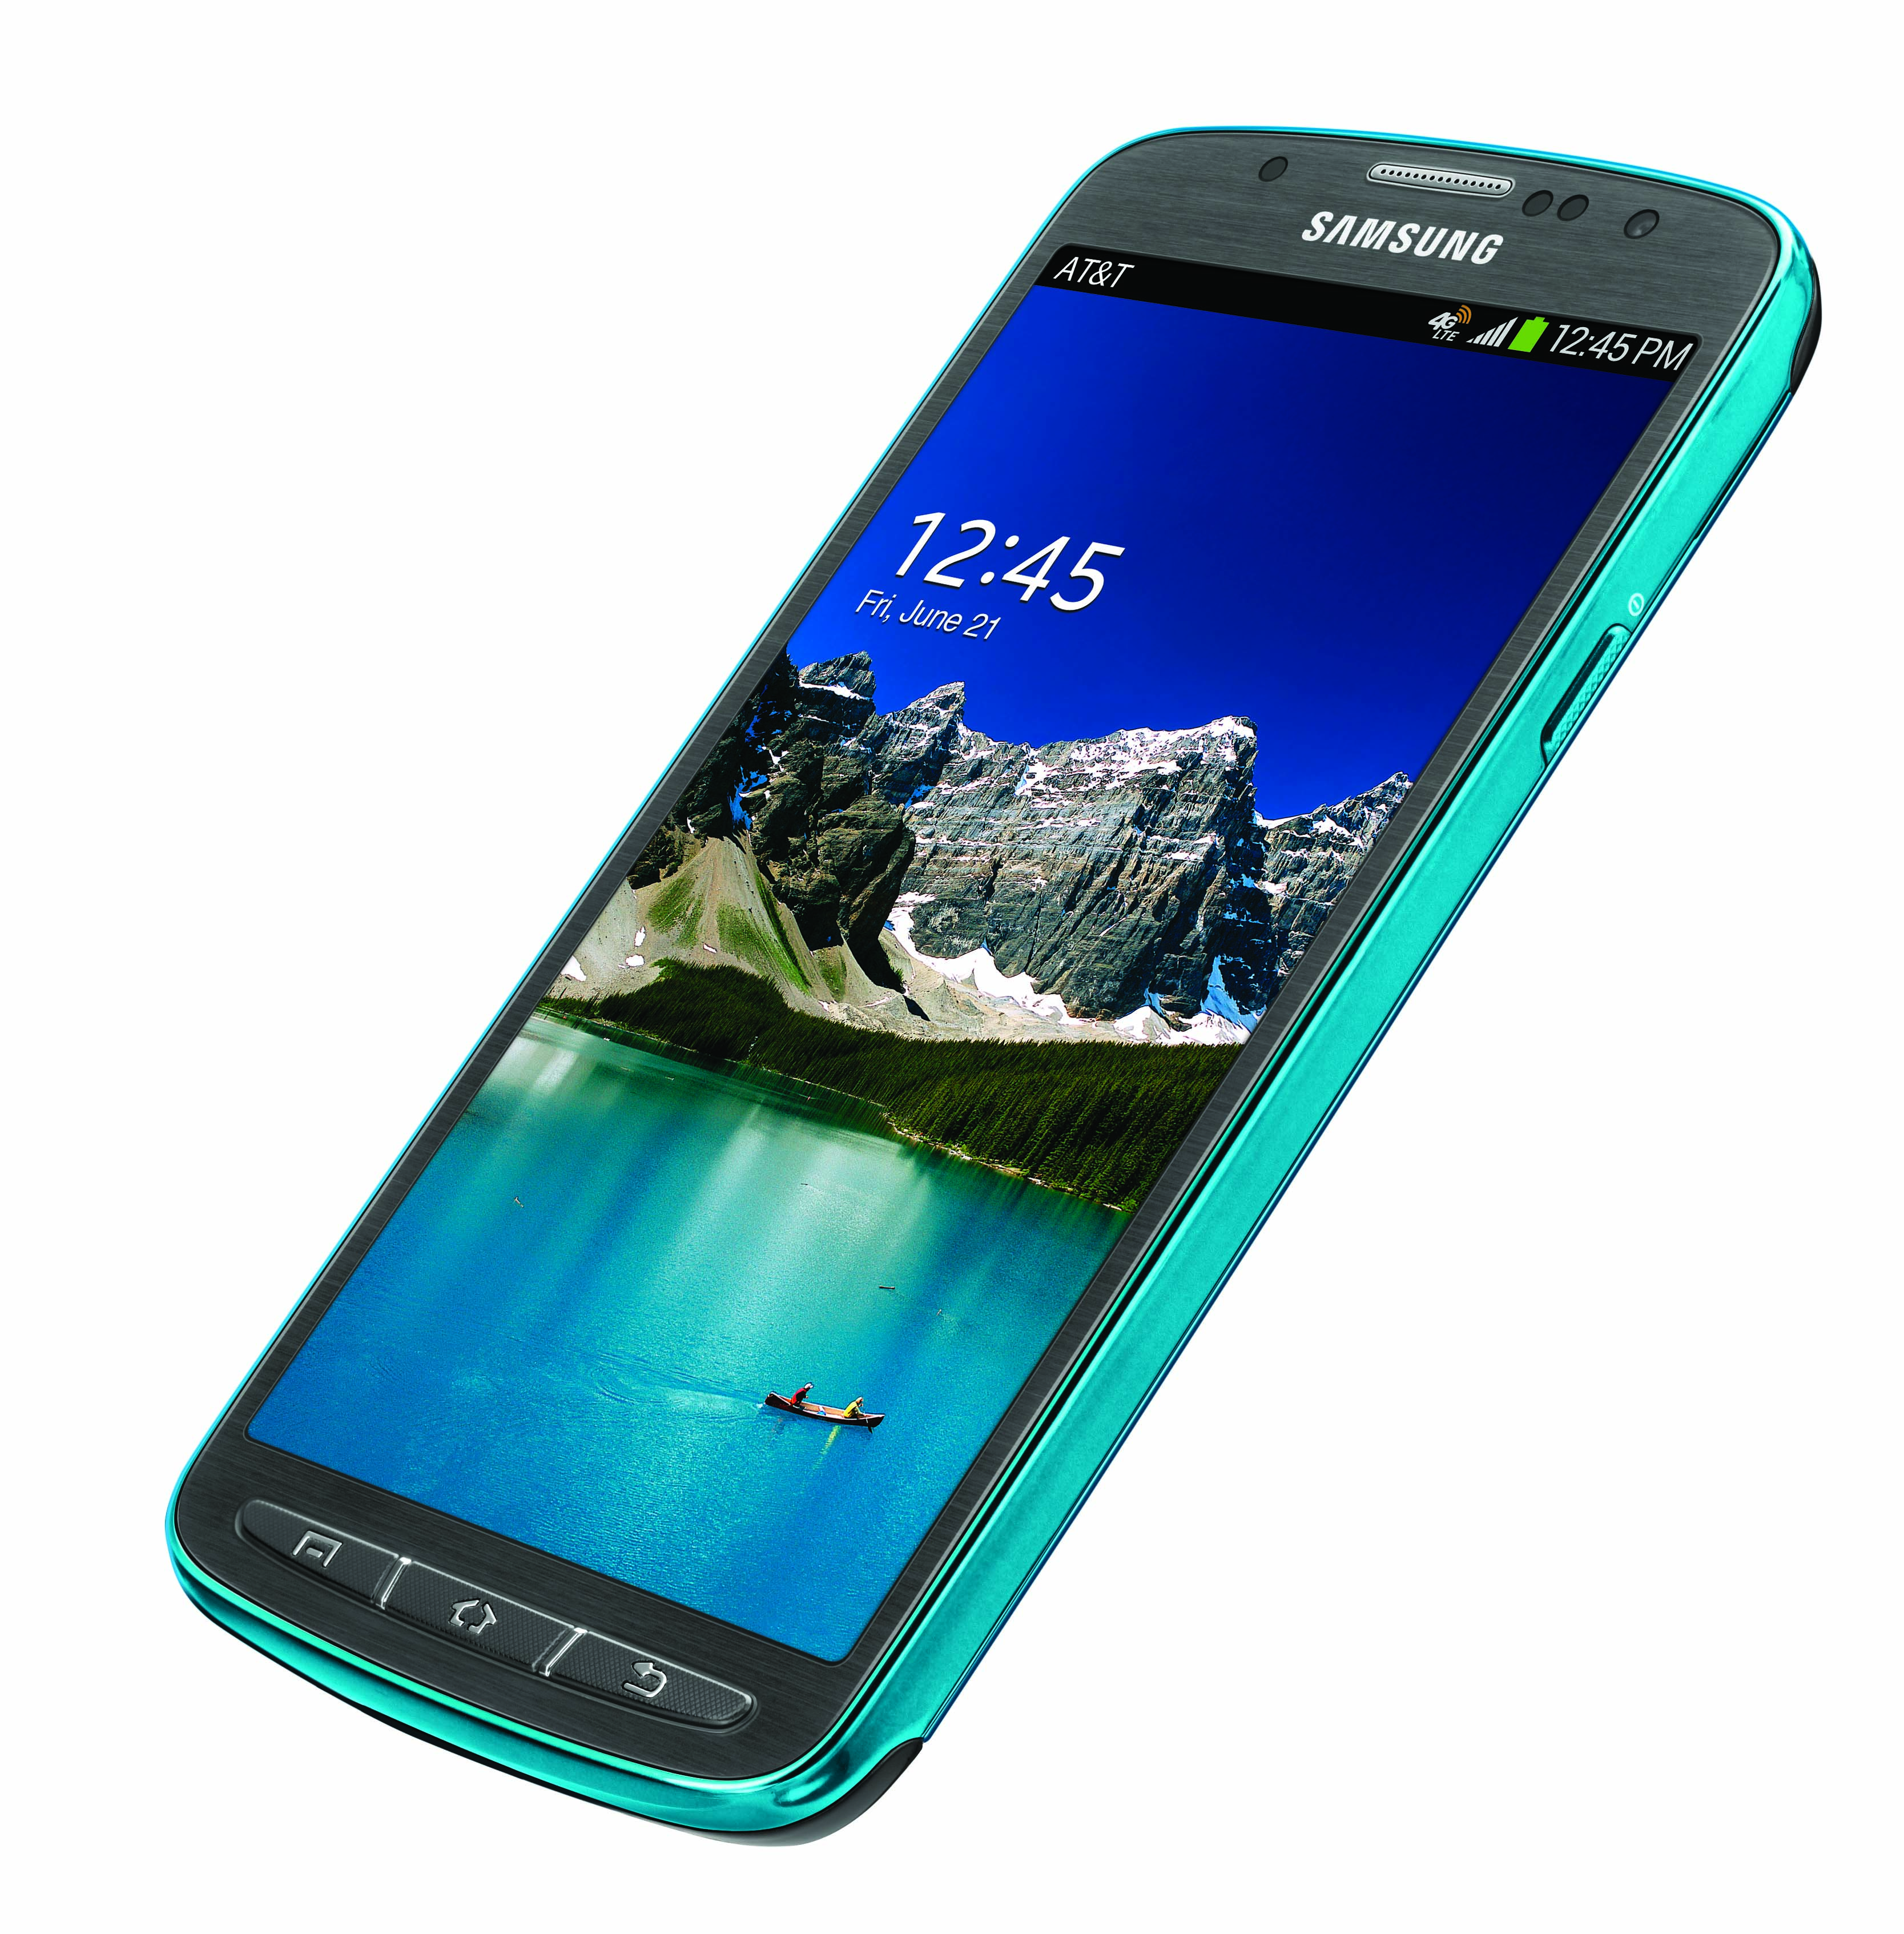 Samsung Galaxy S4 Active azul marinho